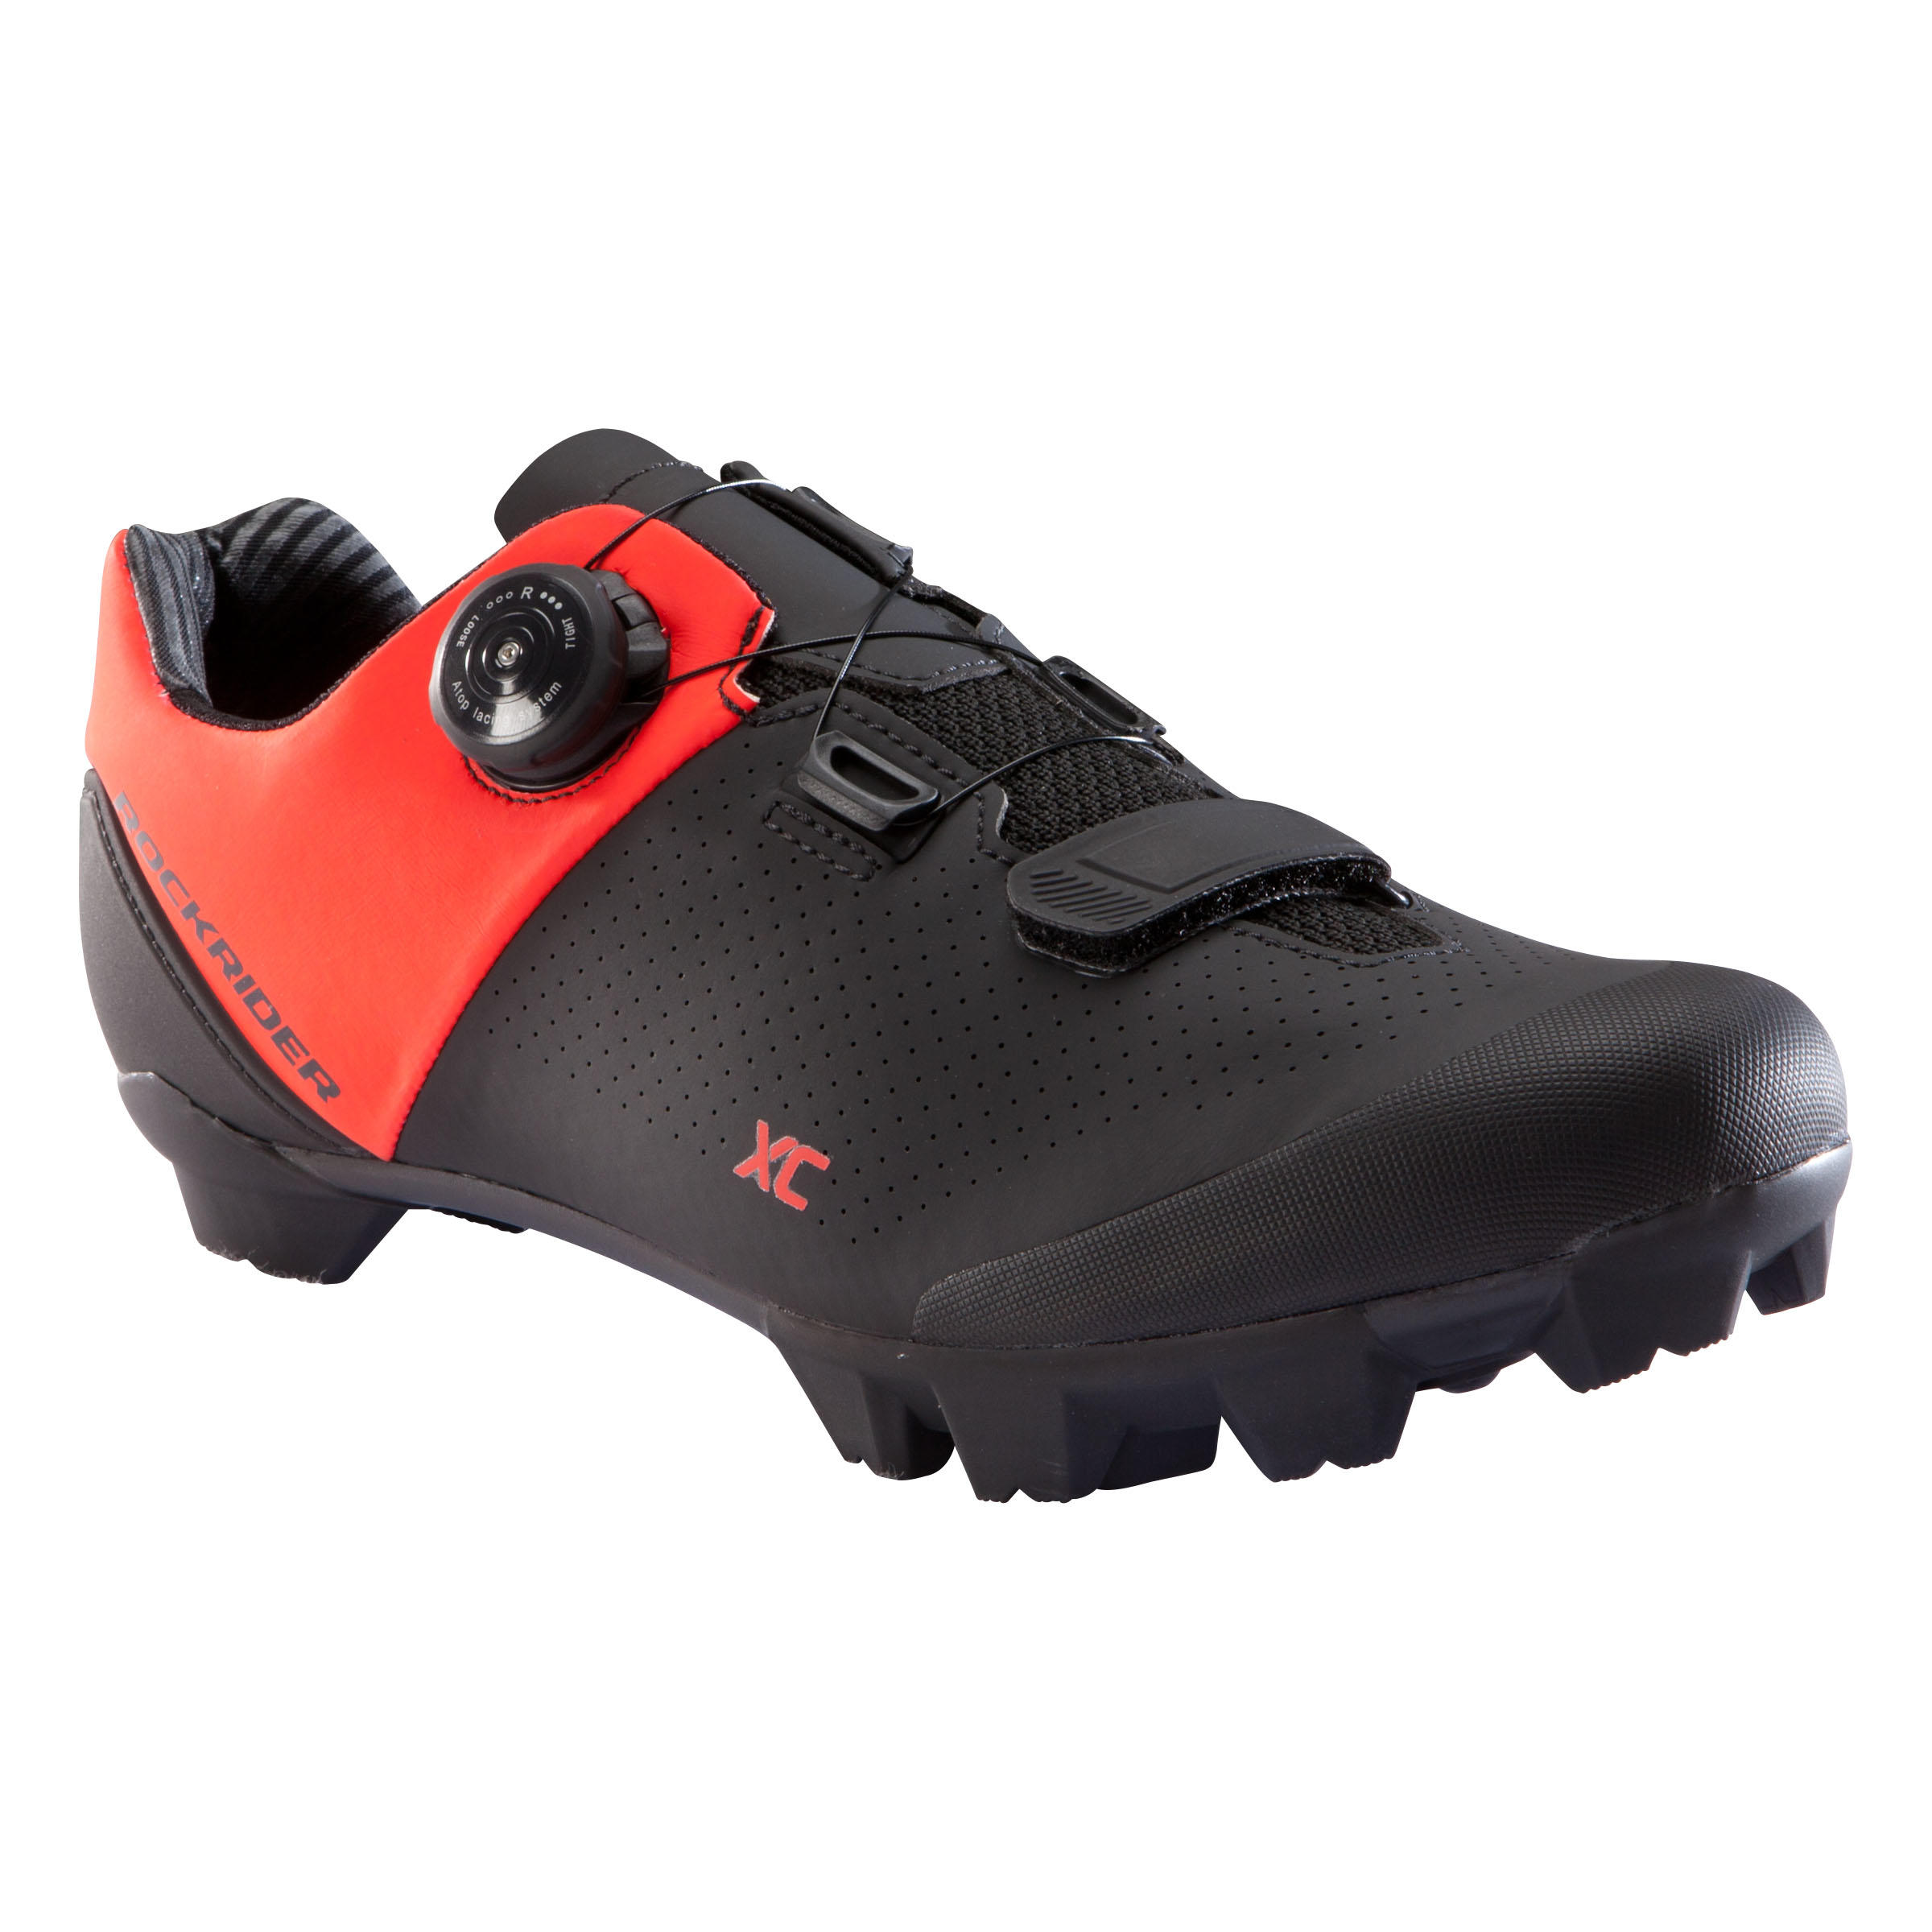 ROCKRIDER XC 500 MTB Shoes - Red